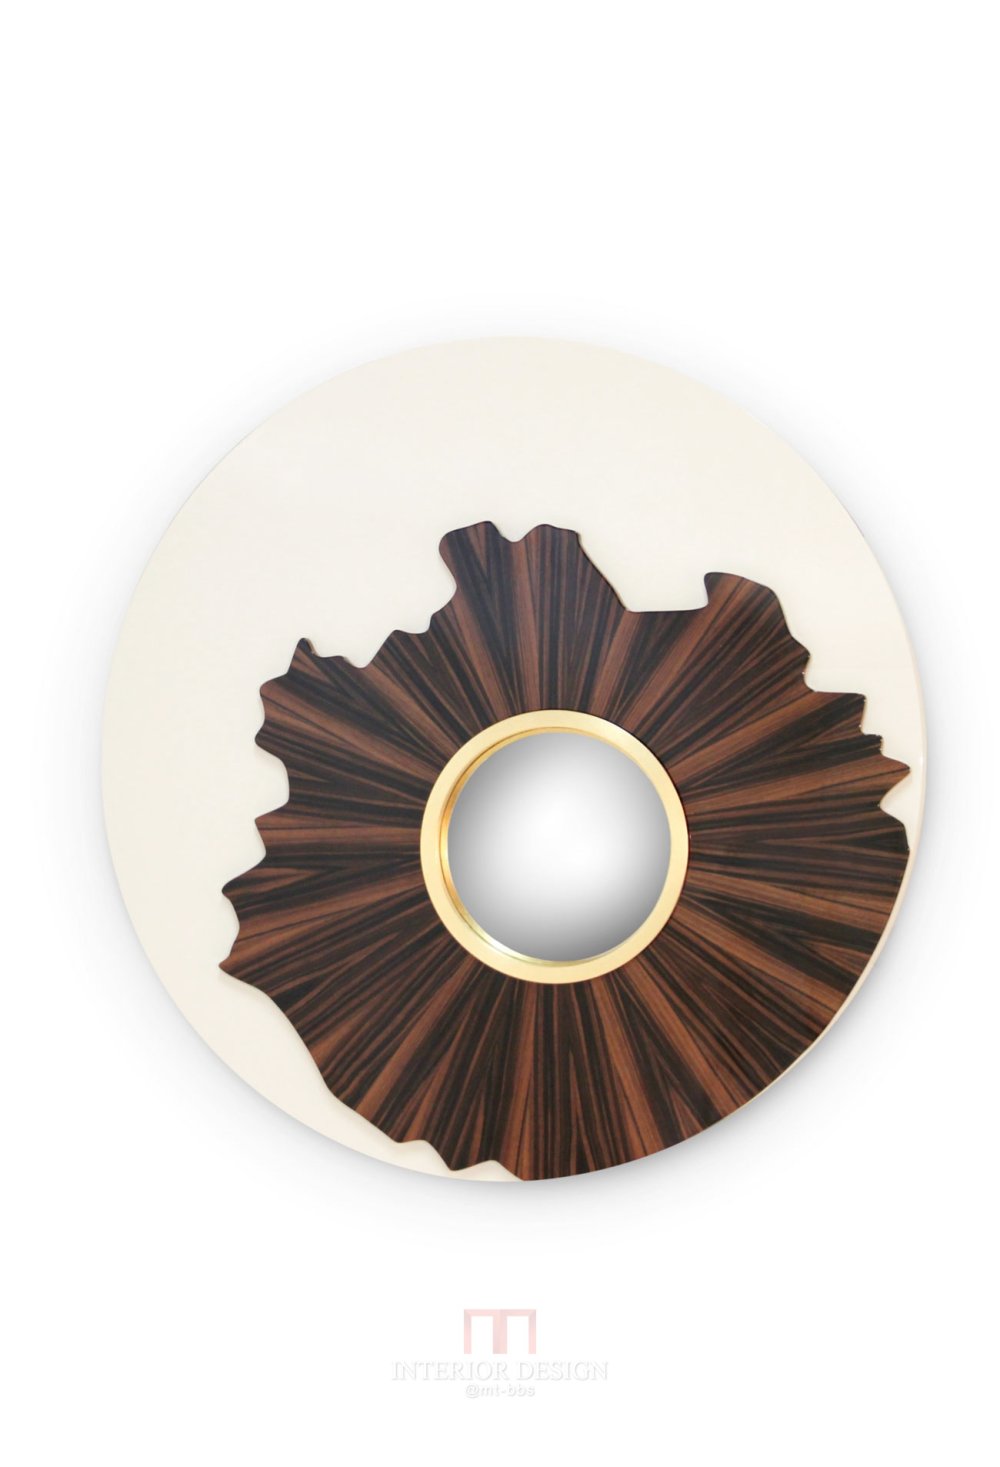 分享品牌创意家具 -BRABBU_iris-large-round-wall-wood-modern-mirror-zoom2.jpg